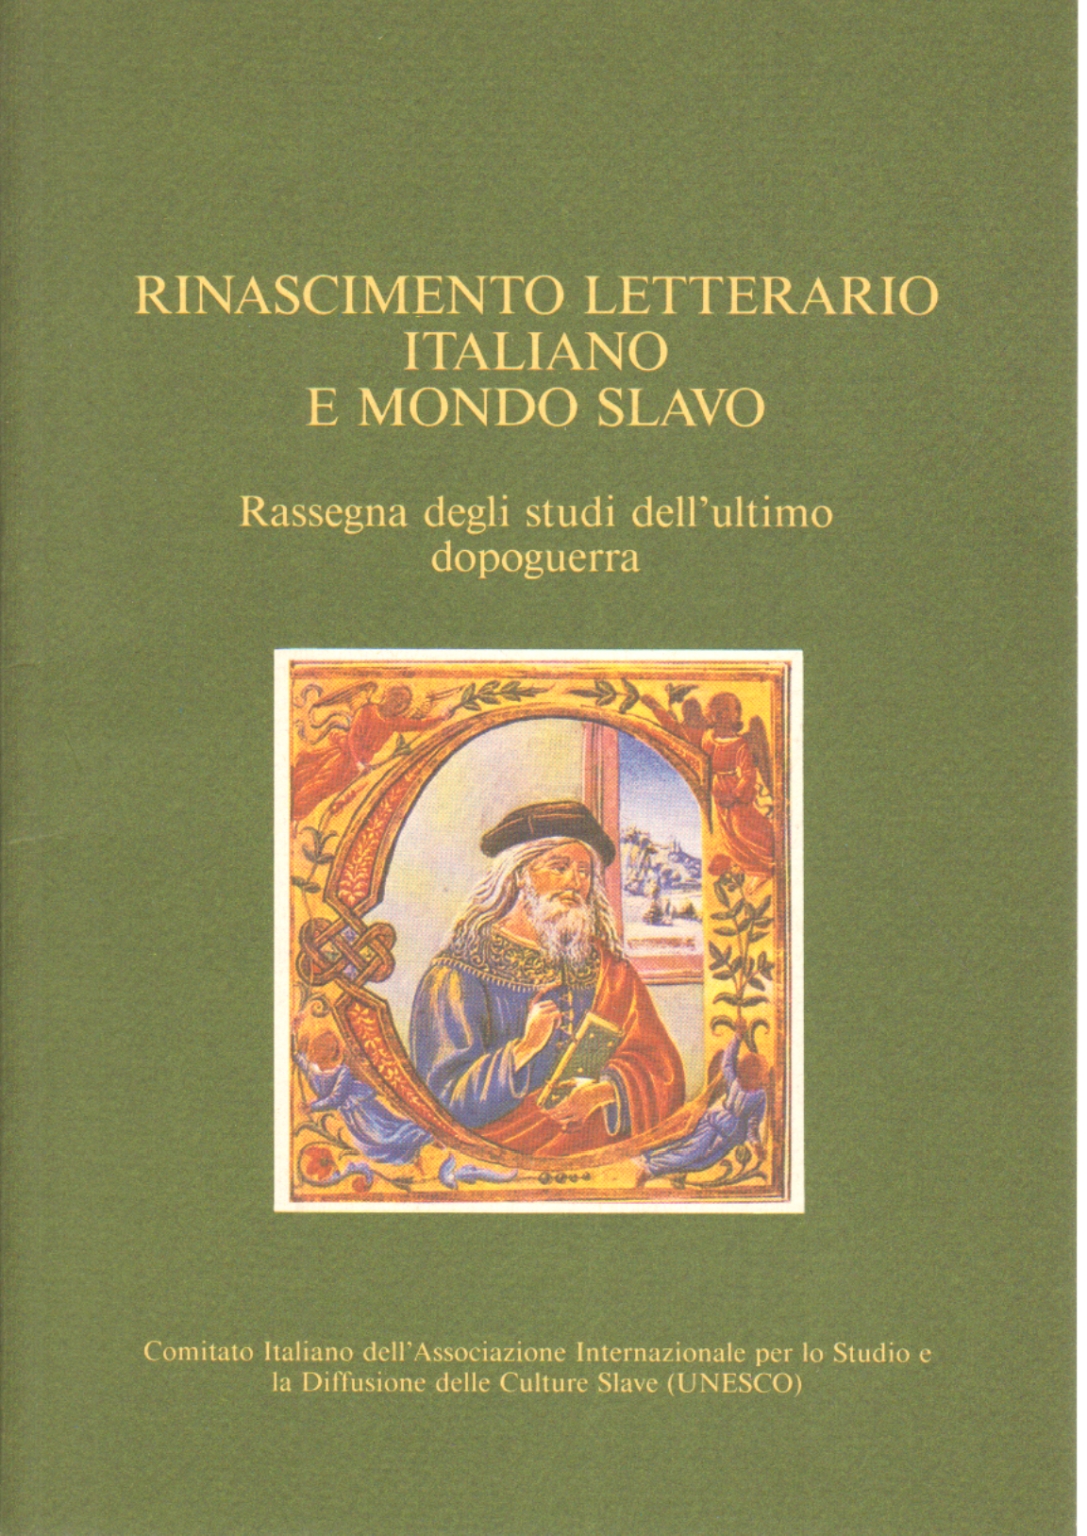 Literary renaissance Italian and the slav world, and Sante Graciotti Emanuela Sgambati